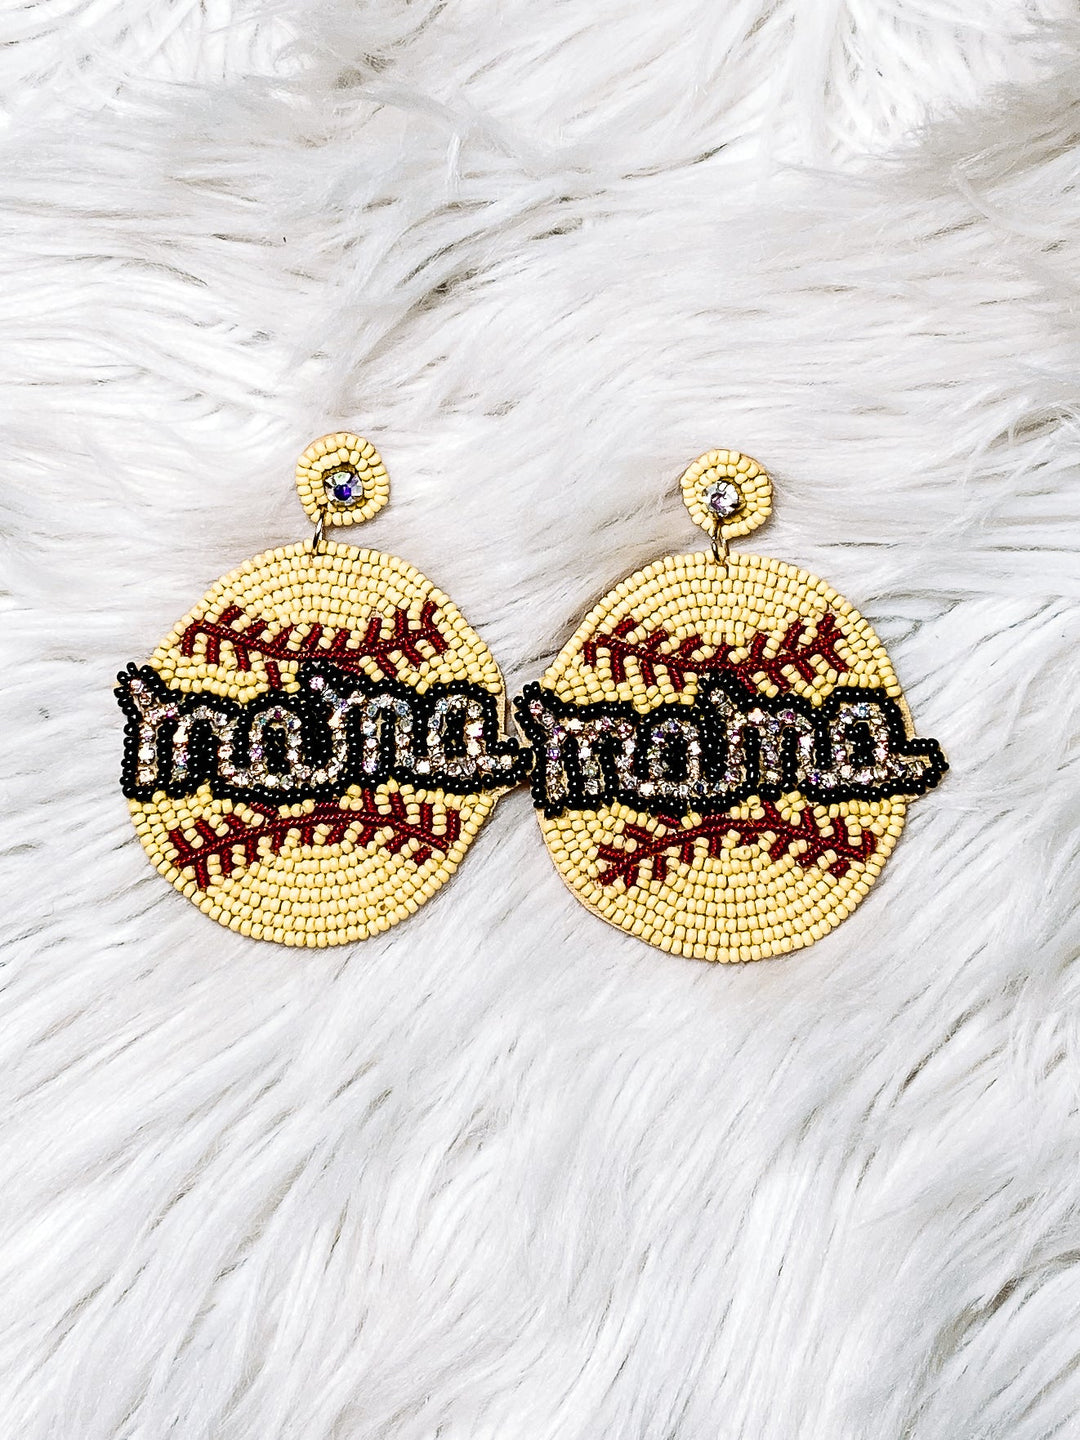 Mama softball seed bead earrings - Jayden Layne